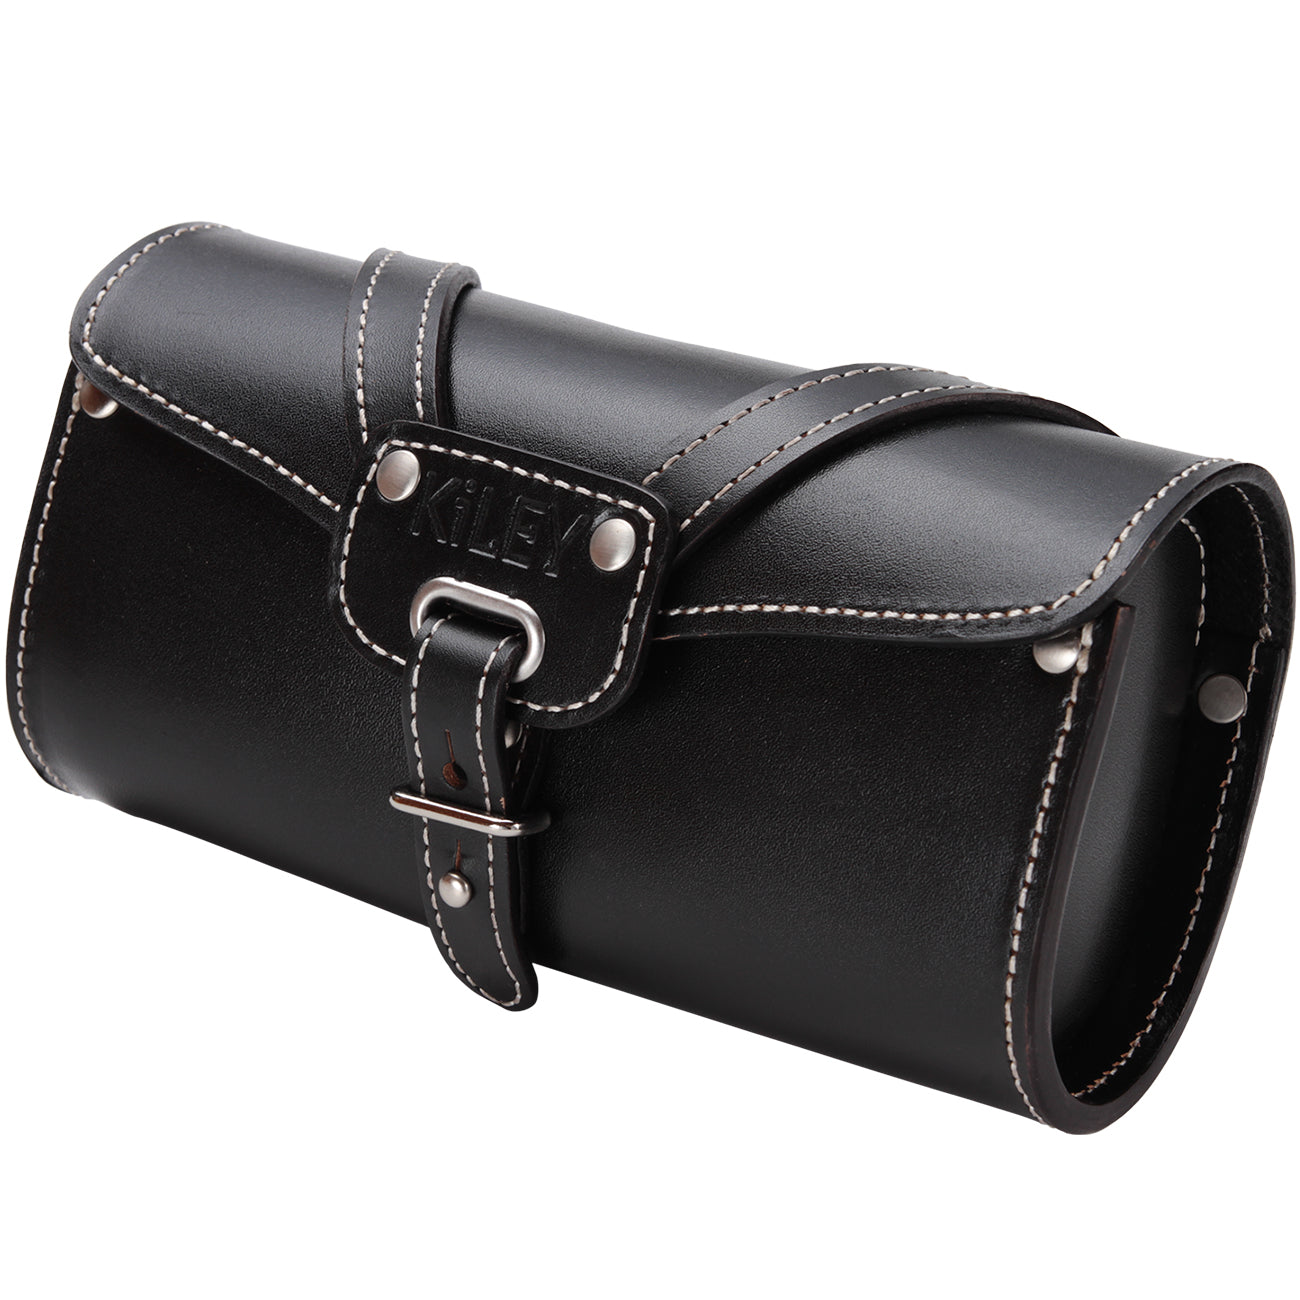 KiLEY cowhide leather bag LM-559